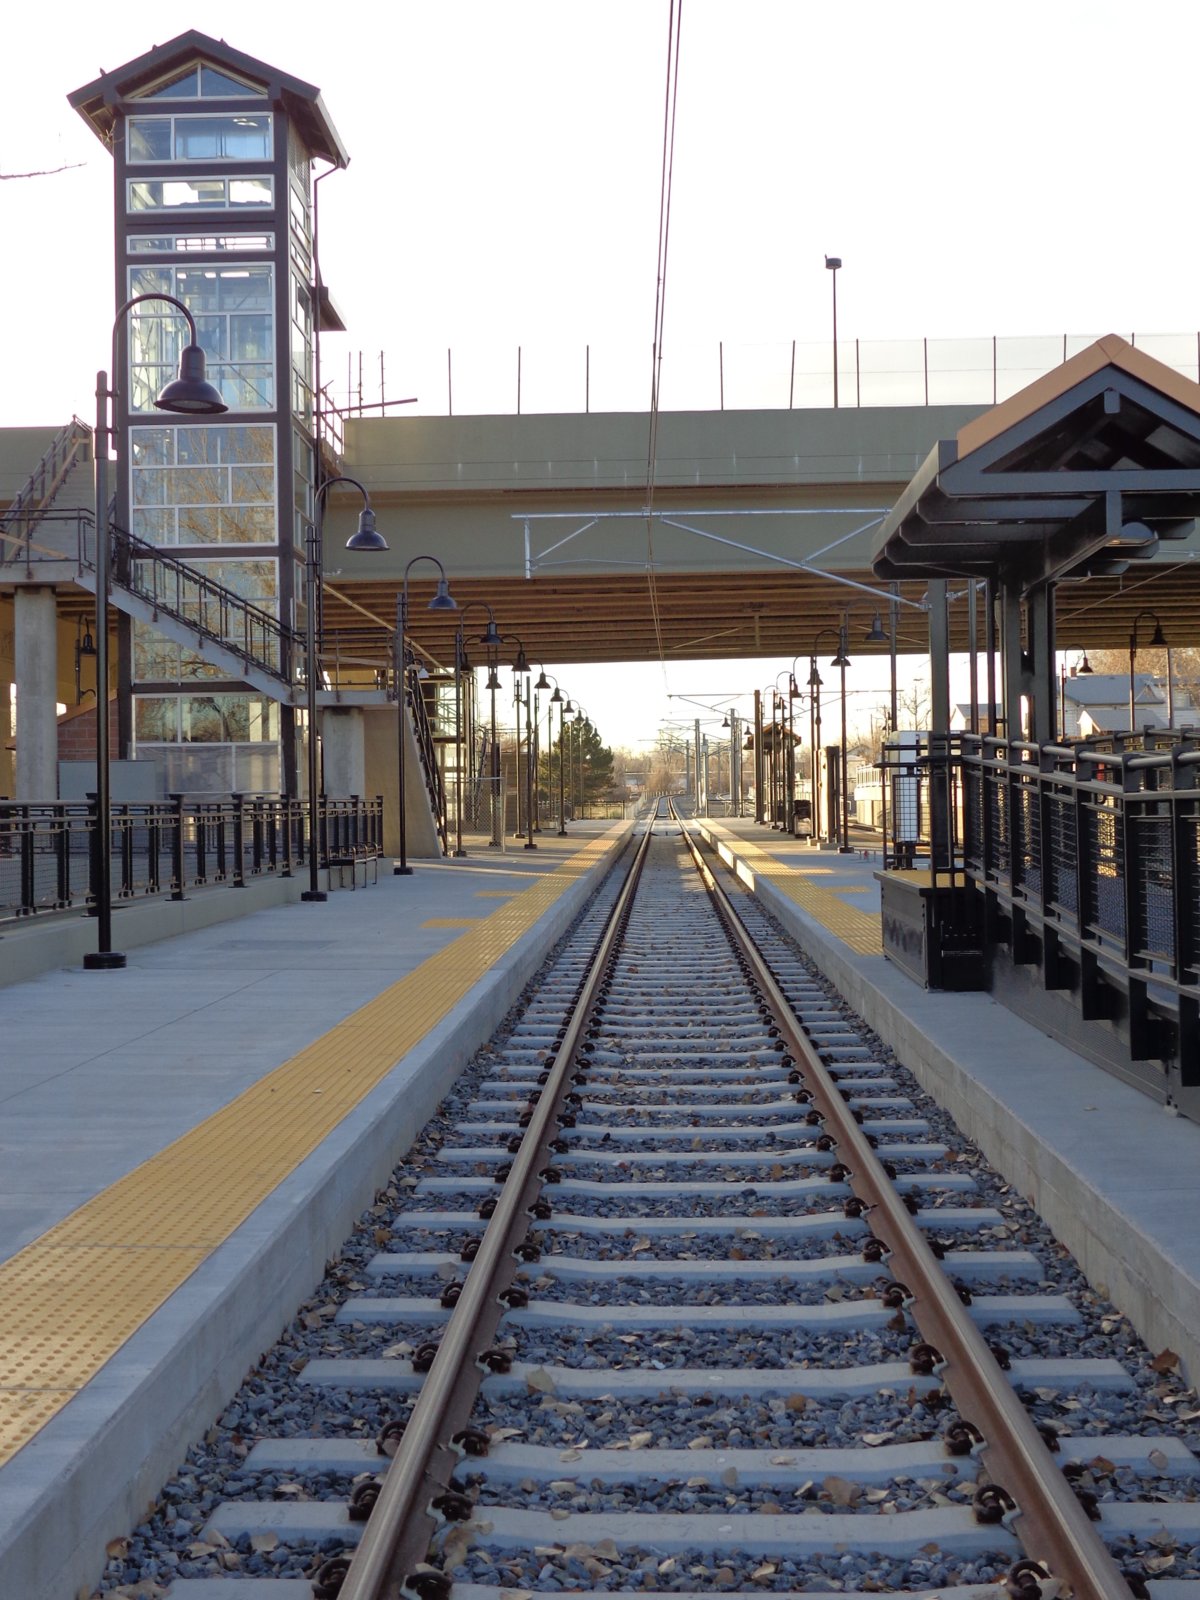 light-rail-train-tracks-and-station.jpg